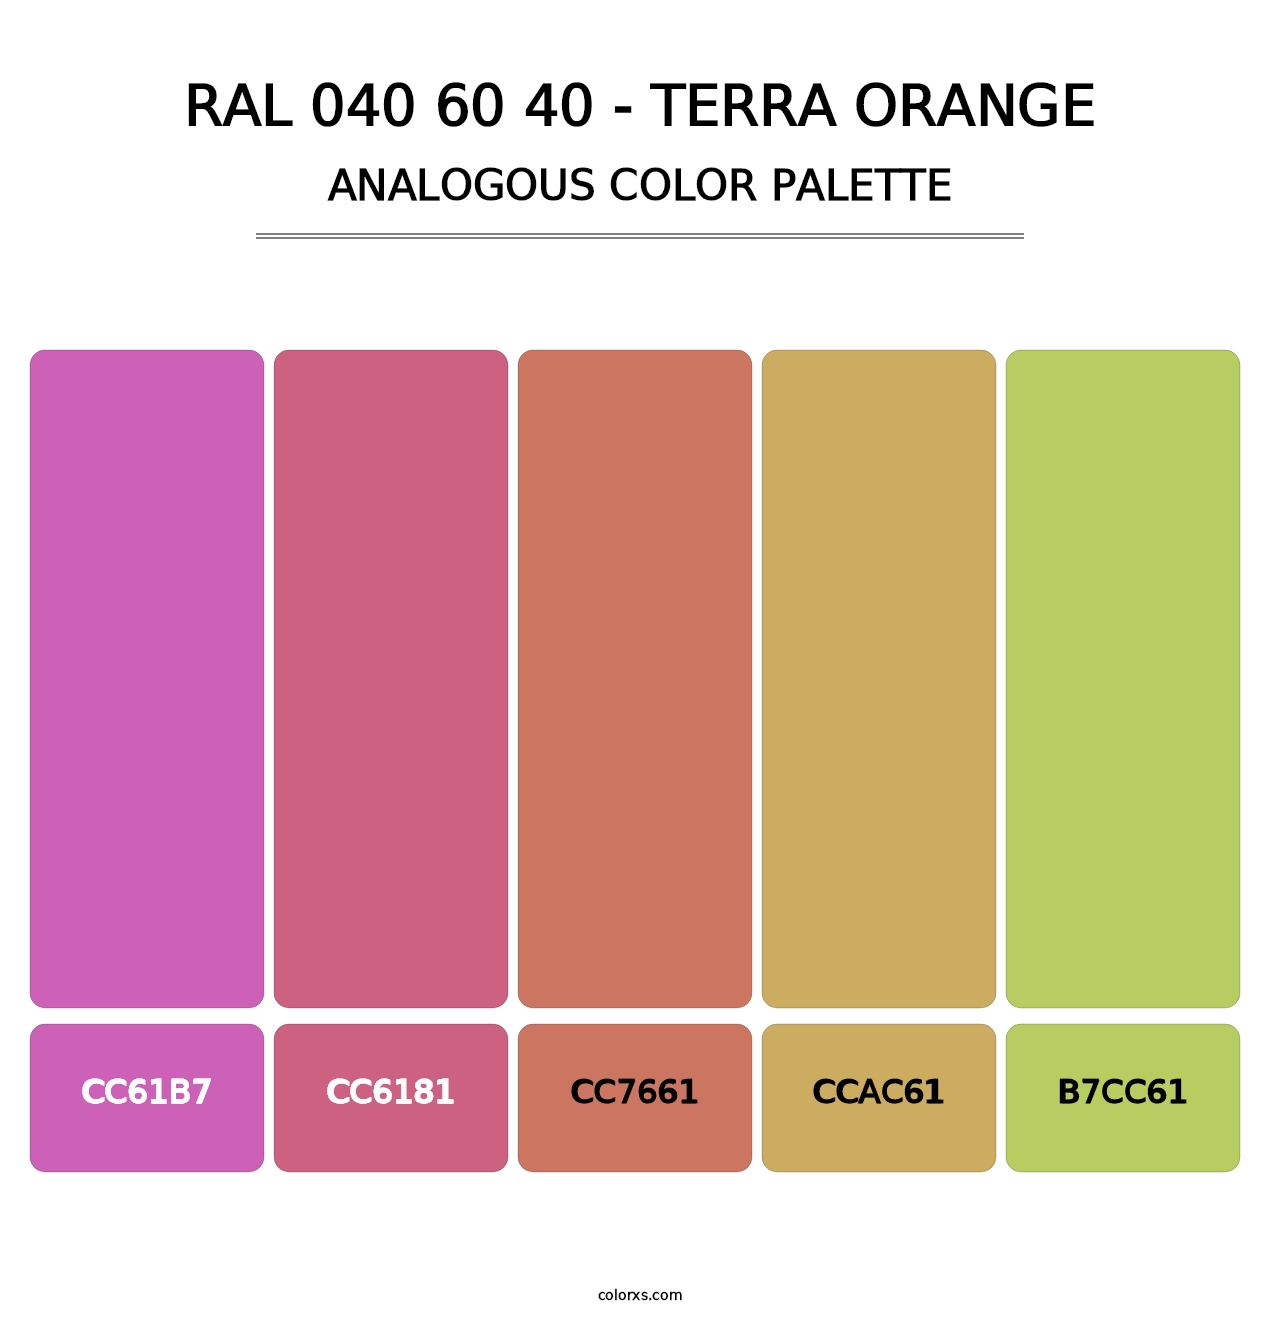 RAL 040 60 40 - Terra Orange - Analogous Color Palette